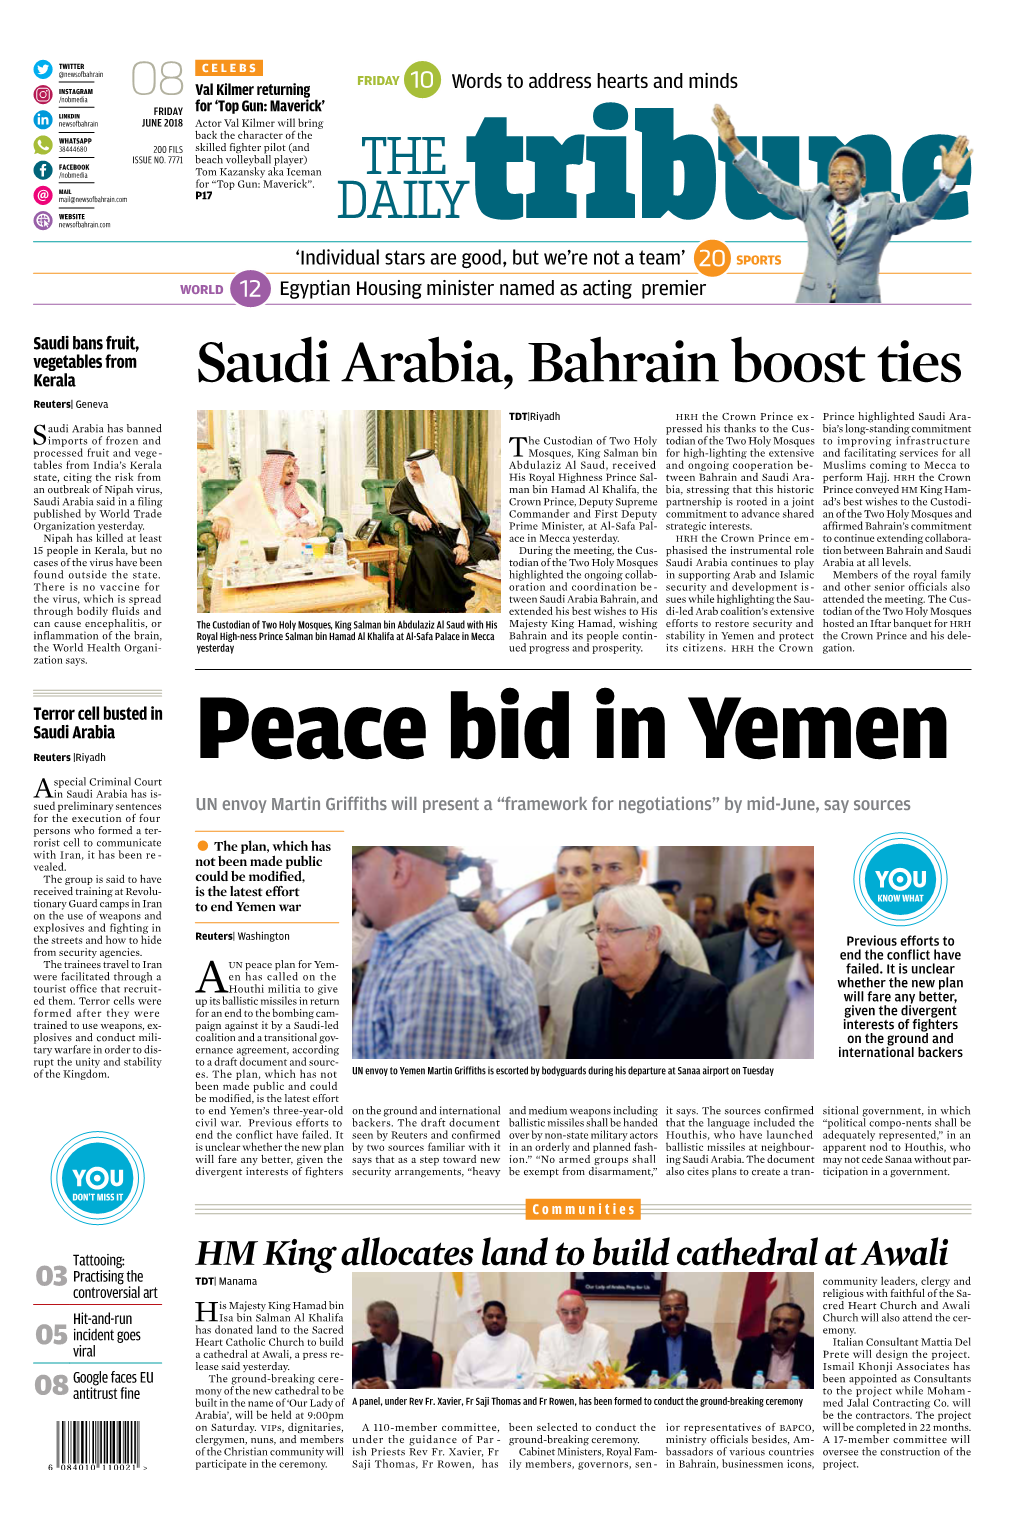 Saudi Arabia, Bahrain Boost Ties